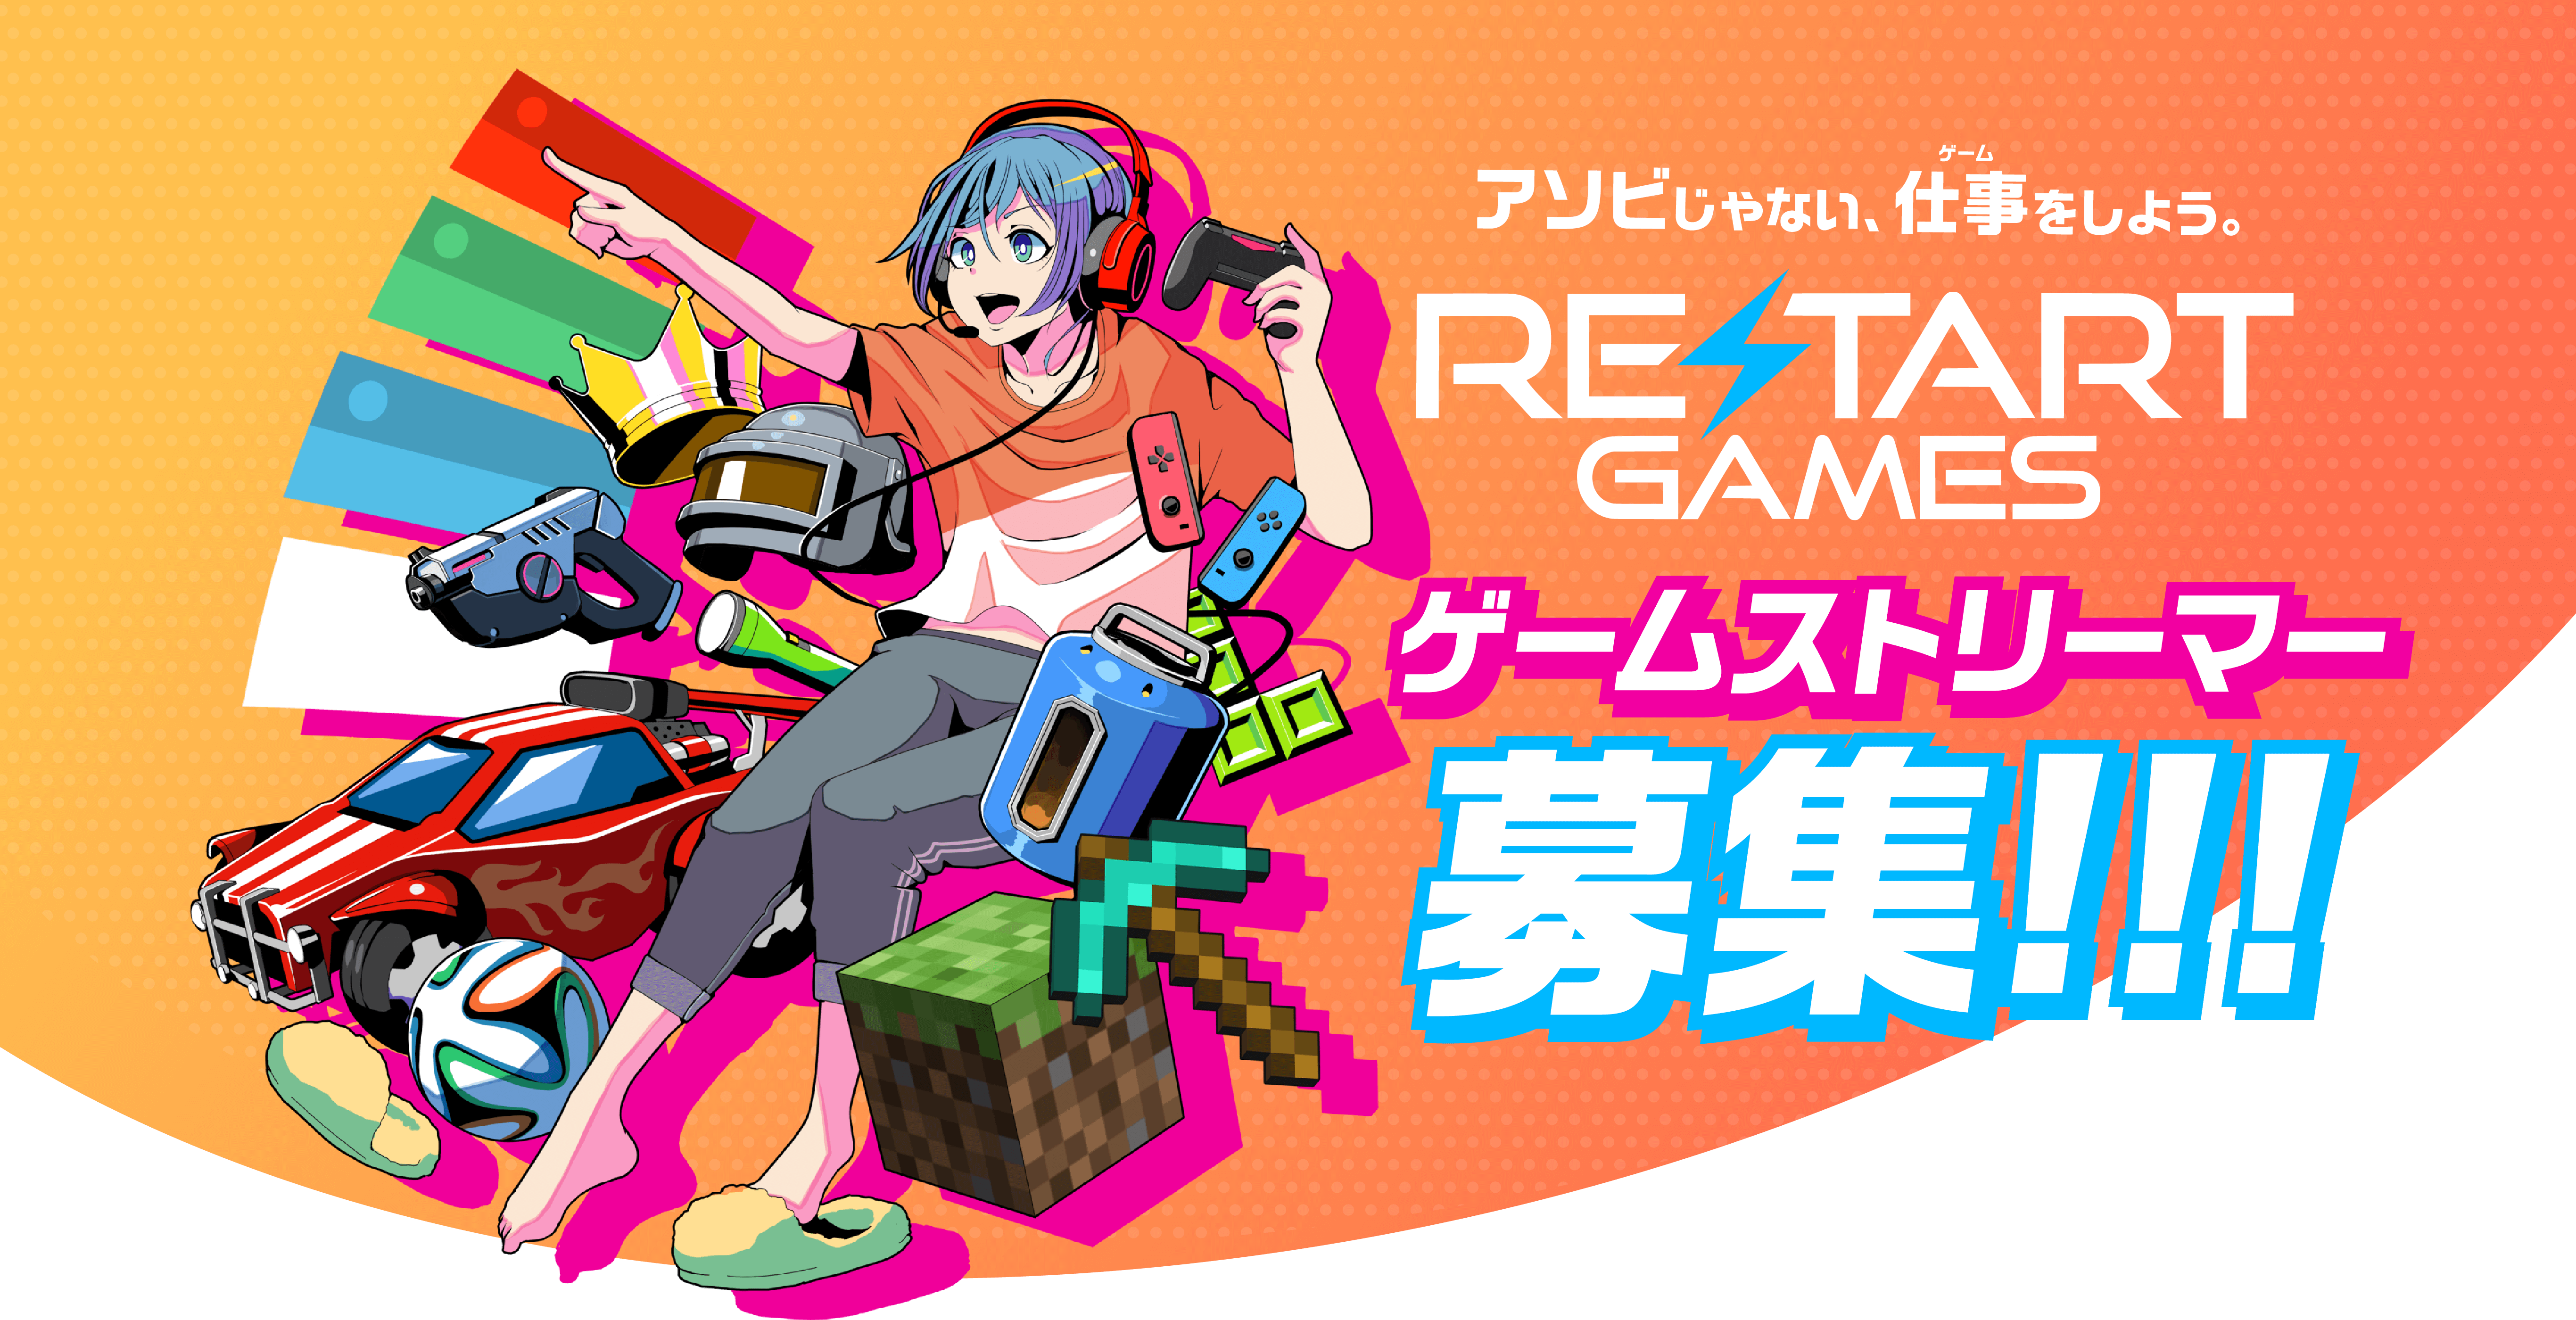 ReStart Games ゲームストリーマー募集!!!